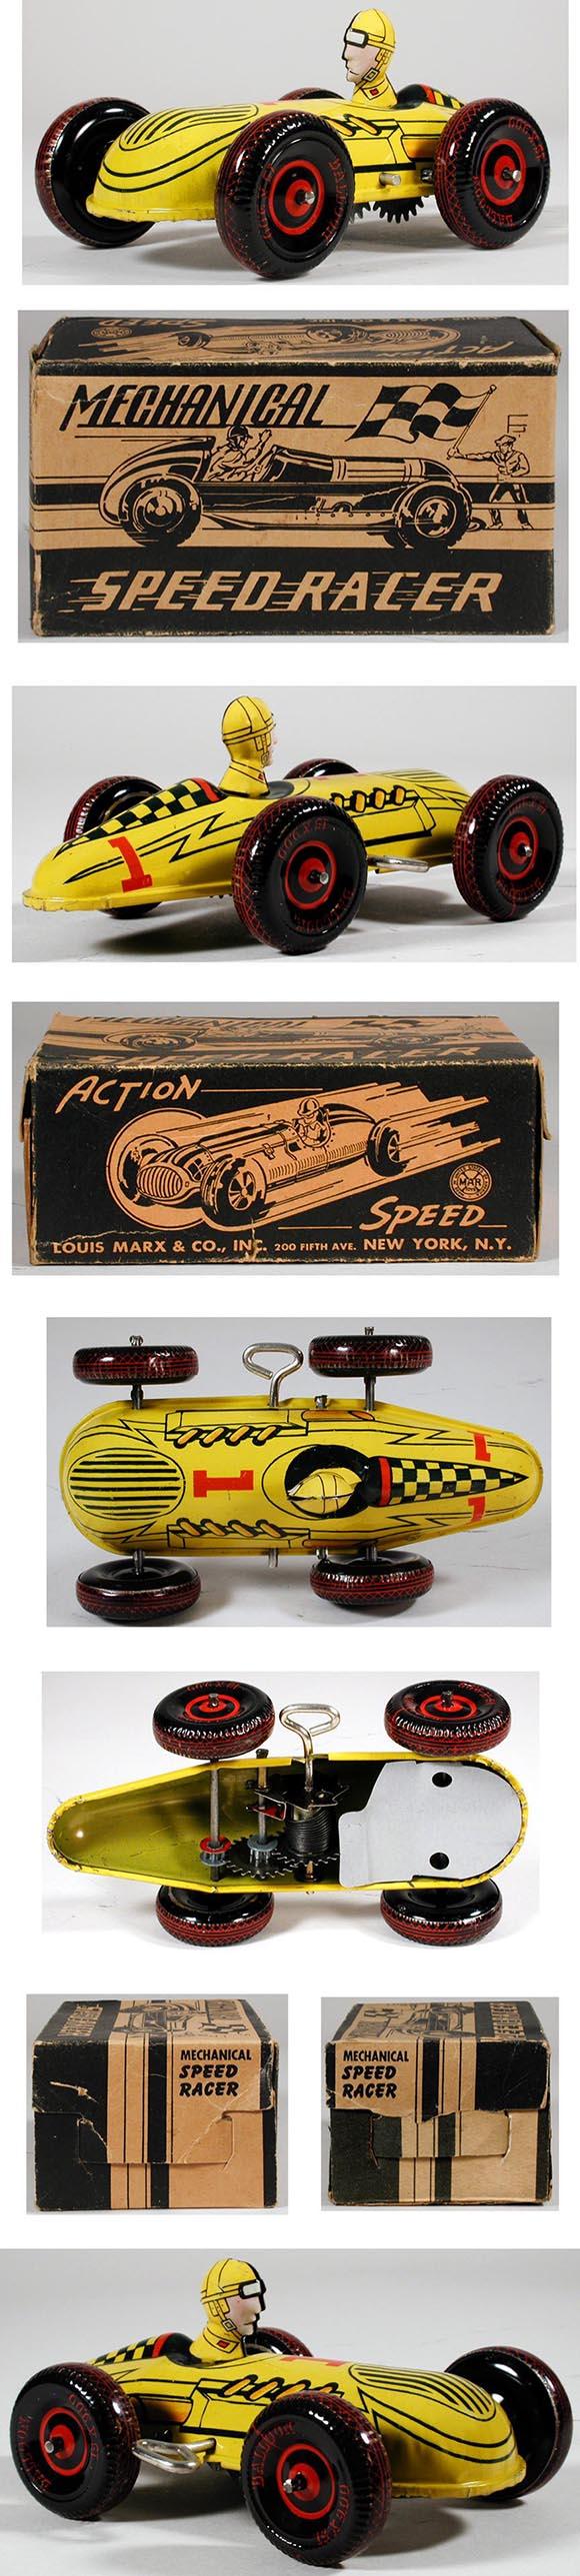 1950 Marx, Mechanical Speed Racer #1 in Original Box